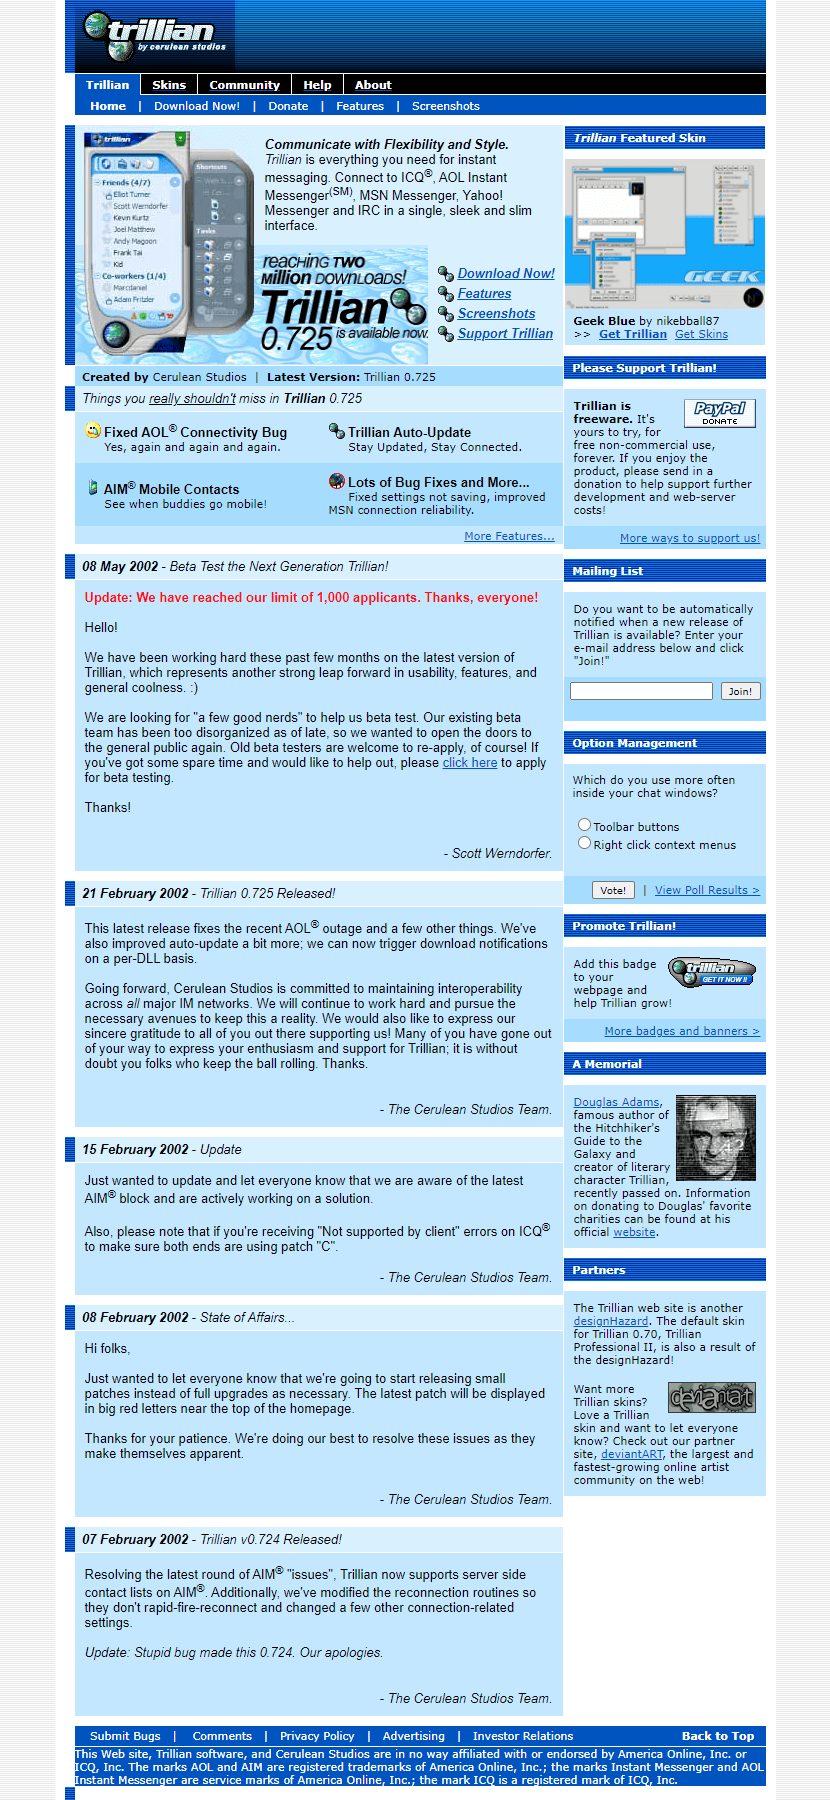 Trillian website in 2002